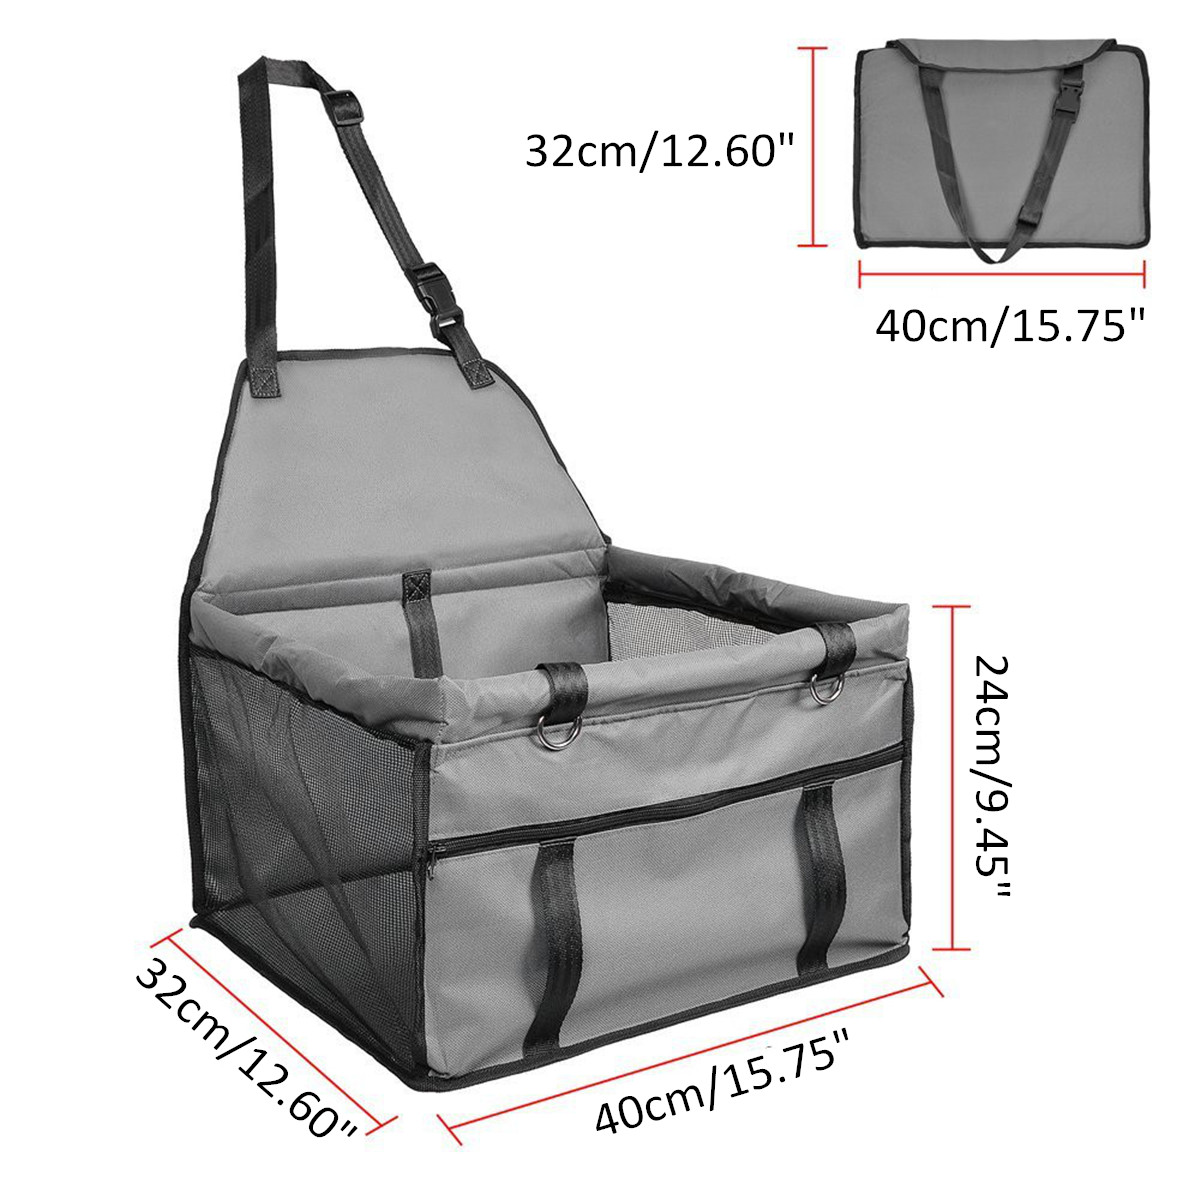 Foldable-Pet-Dog-Car-Seat-Cover-Safe-Basket-Protector-Puppy-Travel-Pet-Carrier-Bag-1178851-12